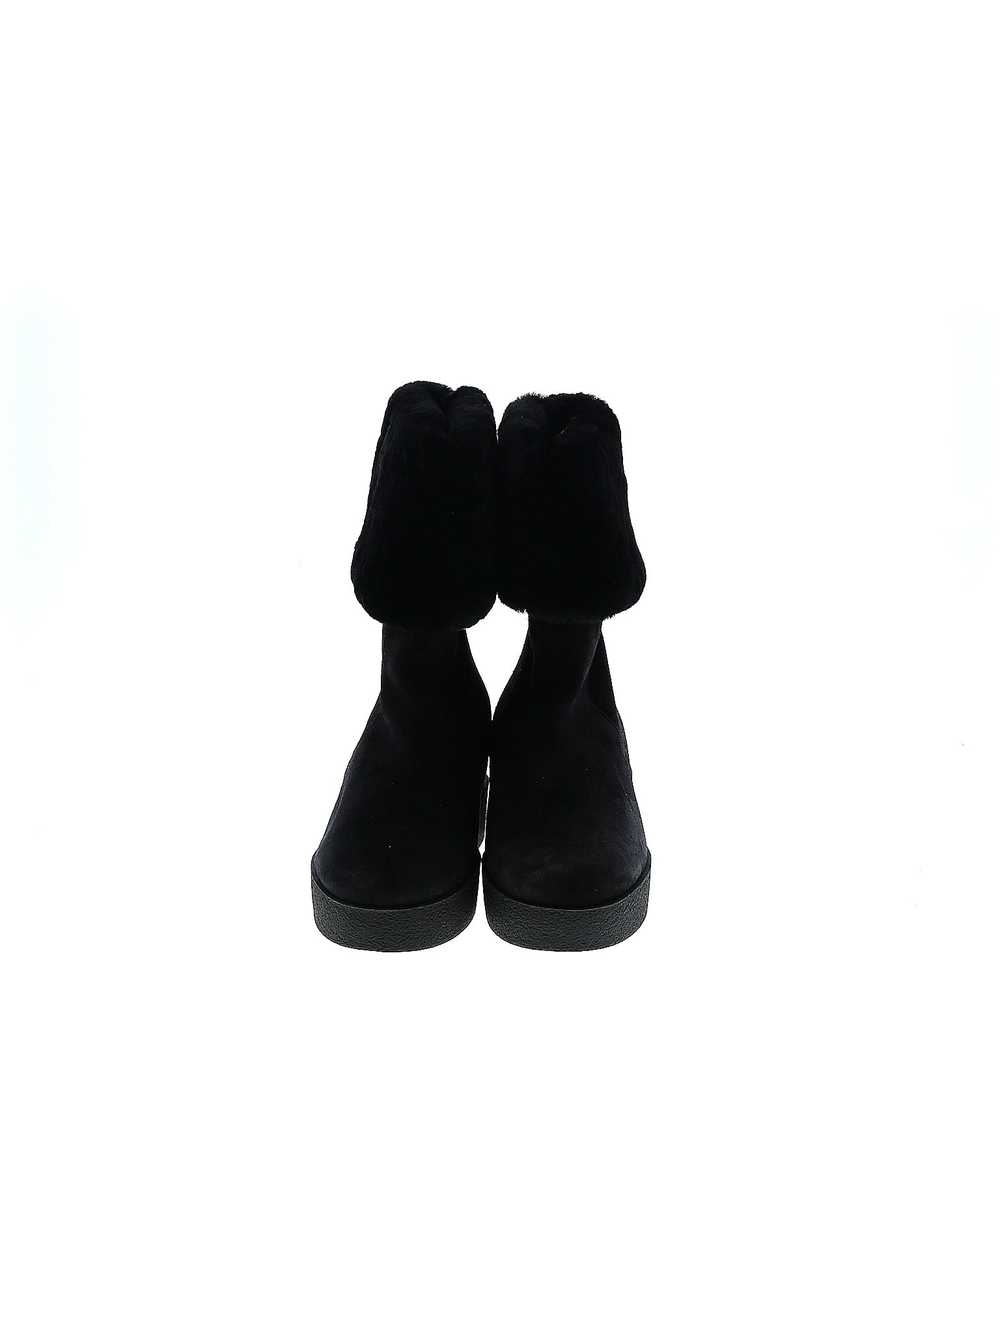 Salvatore Ferragamo Women Black Boots 7.5 - image 2